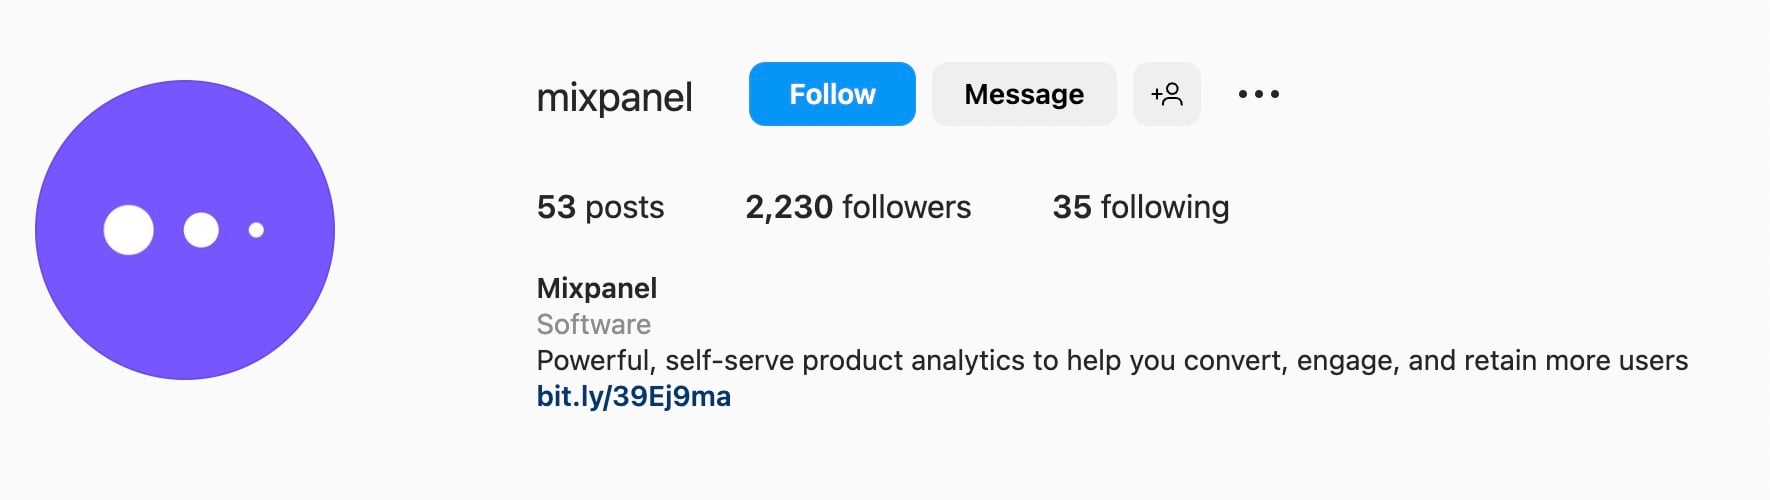 Simple Instagram bio ideas for SaaS businesses, mixpanel